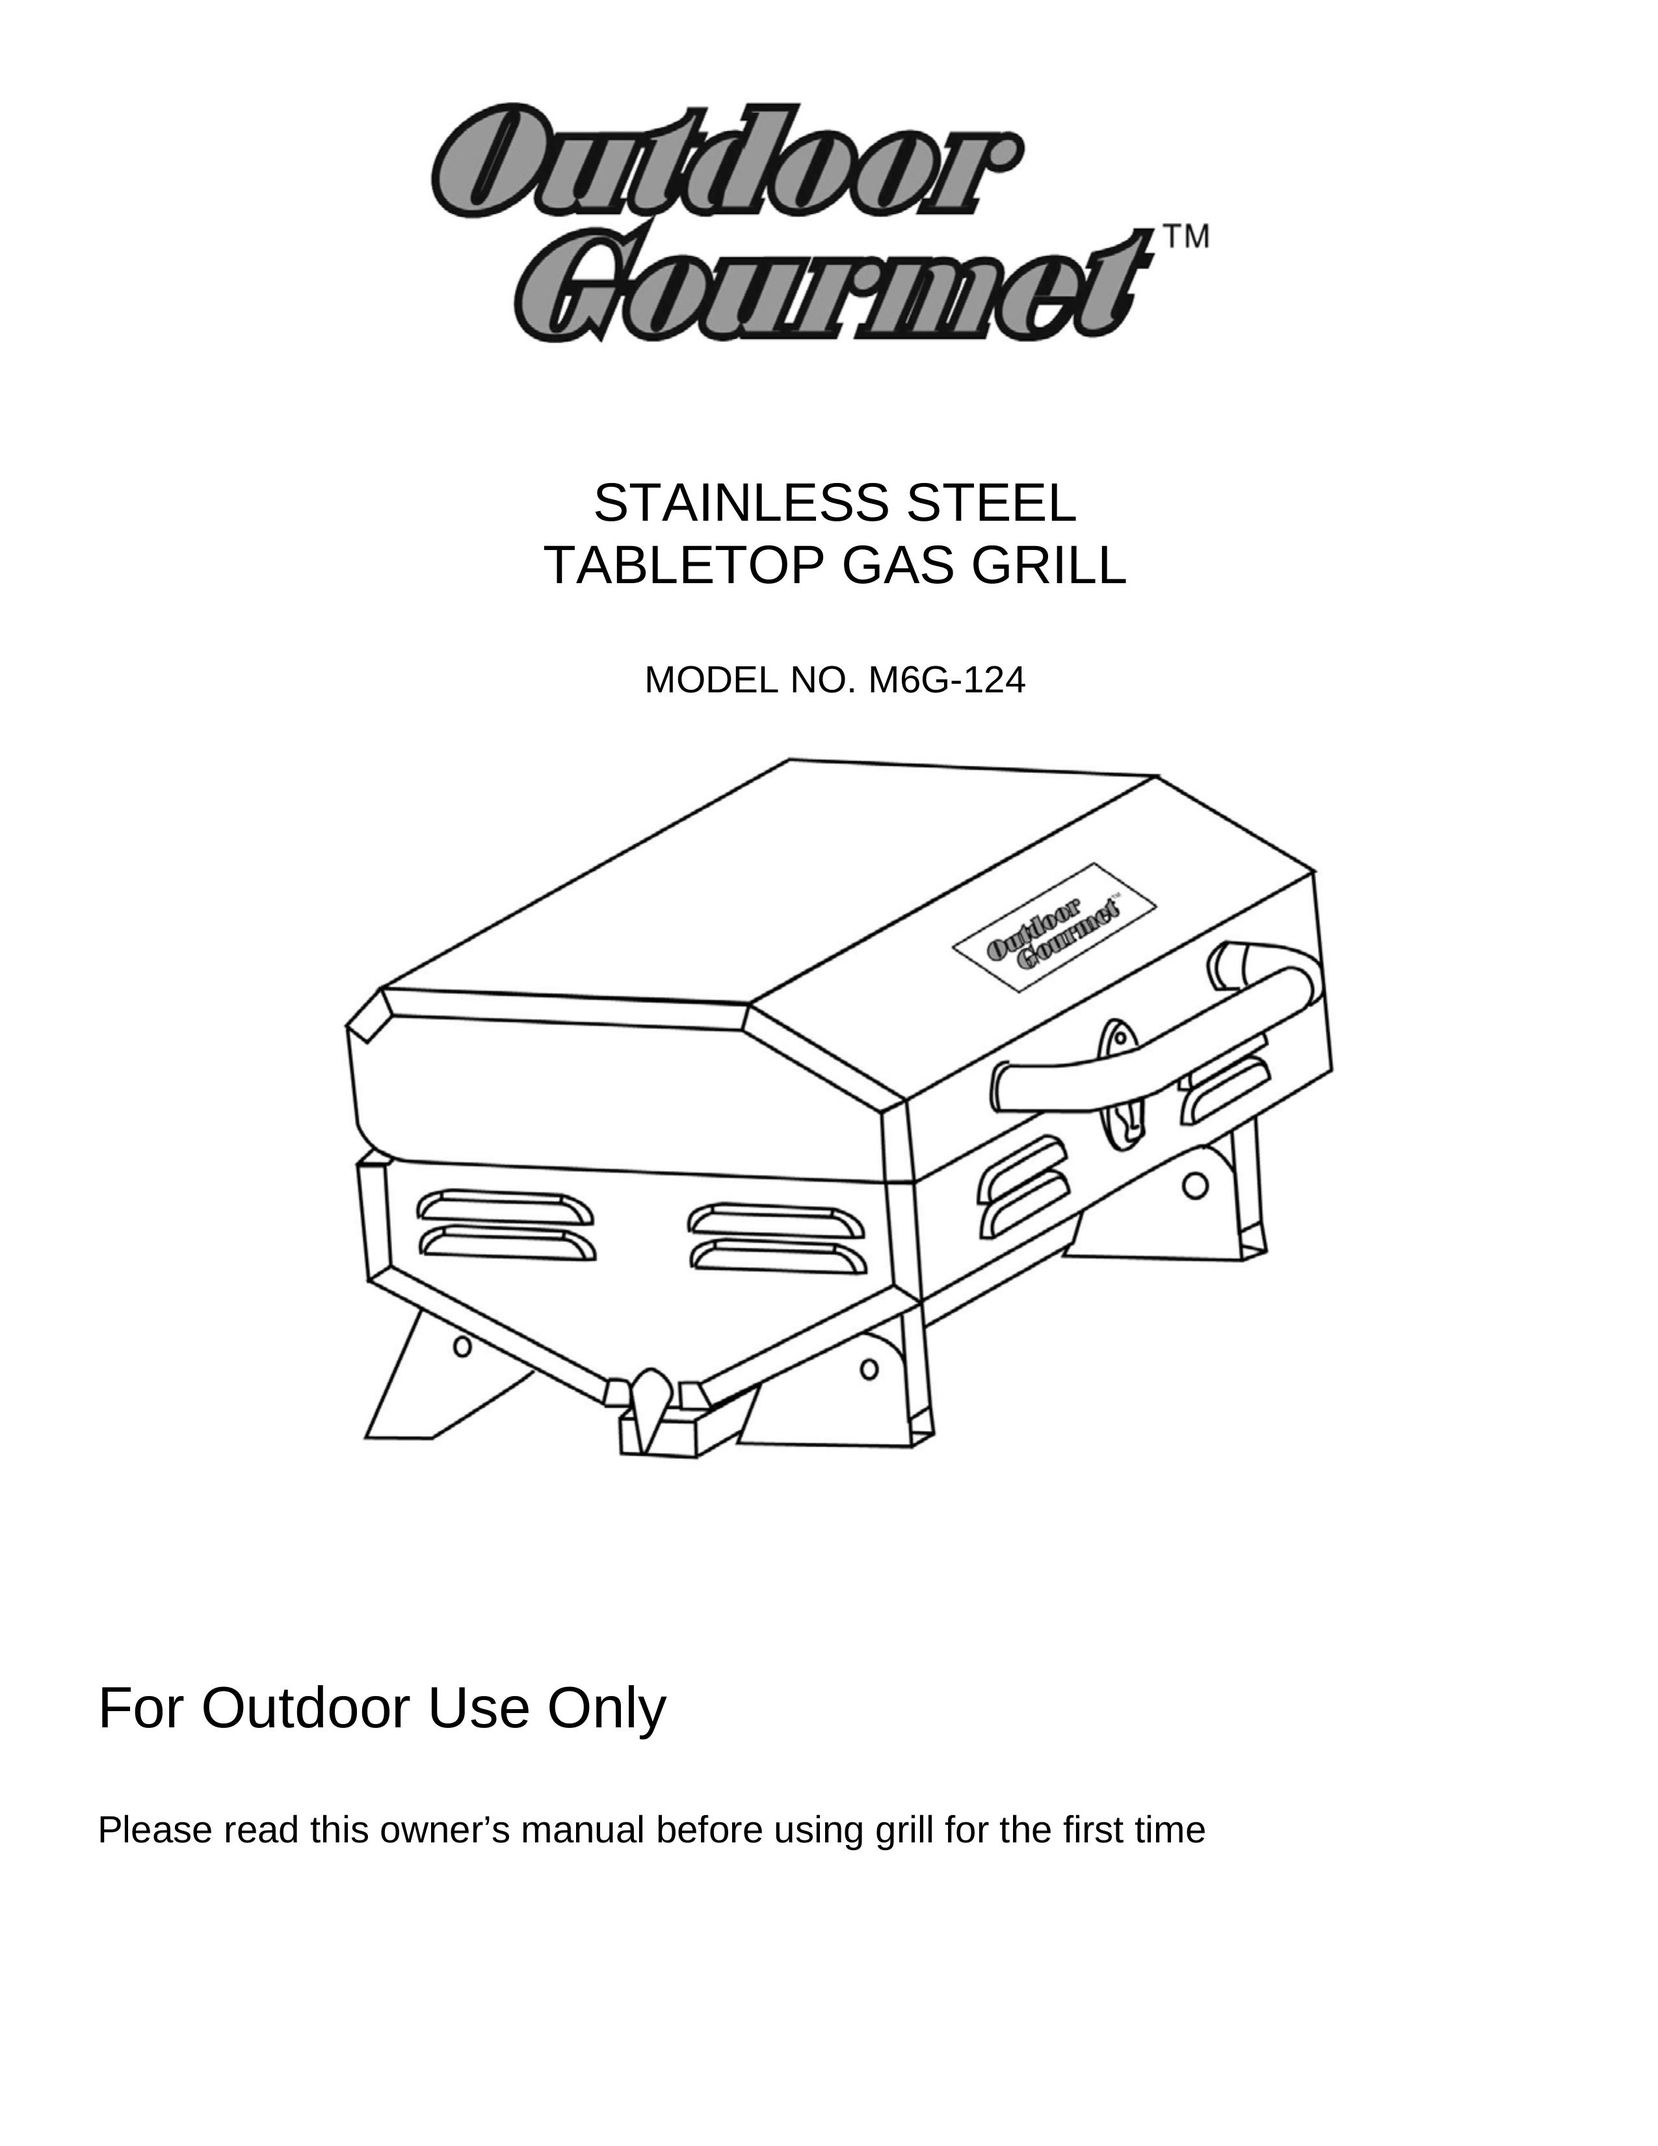 Outdoor Gourmet M6G-124 VCR User Manual